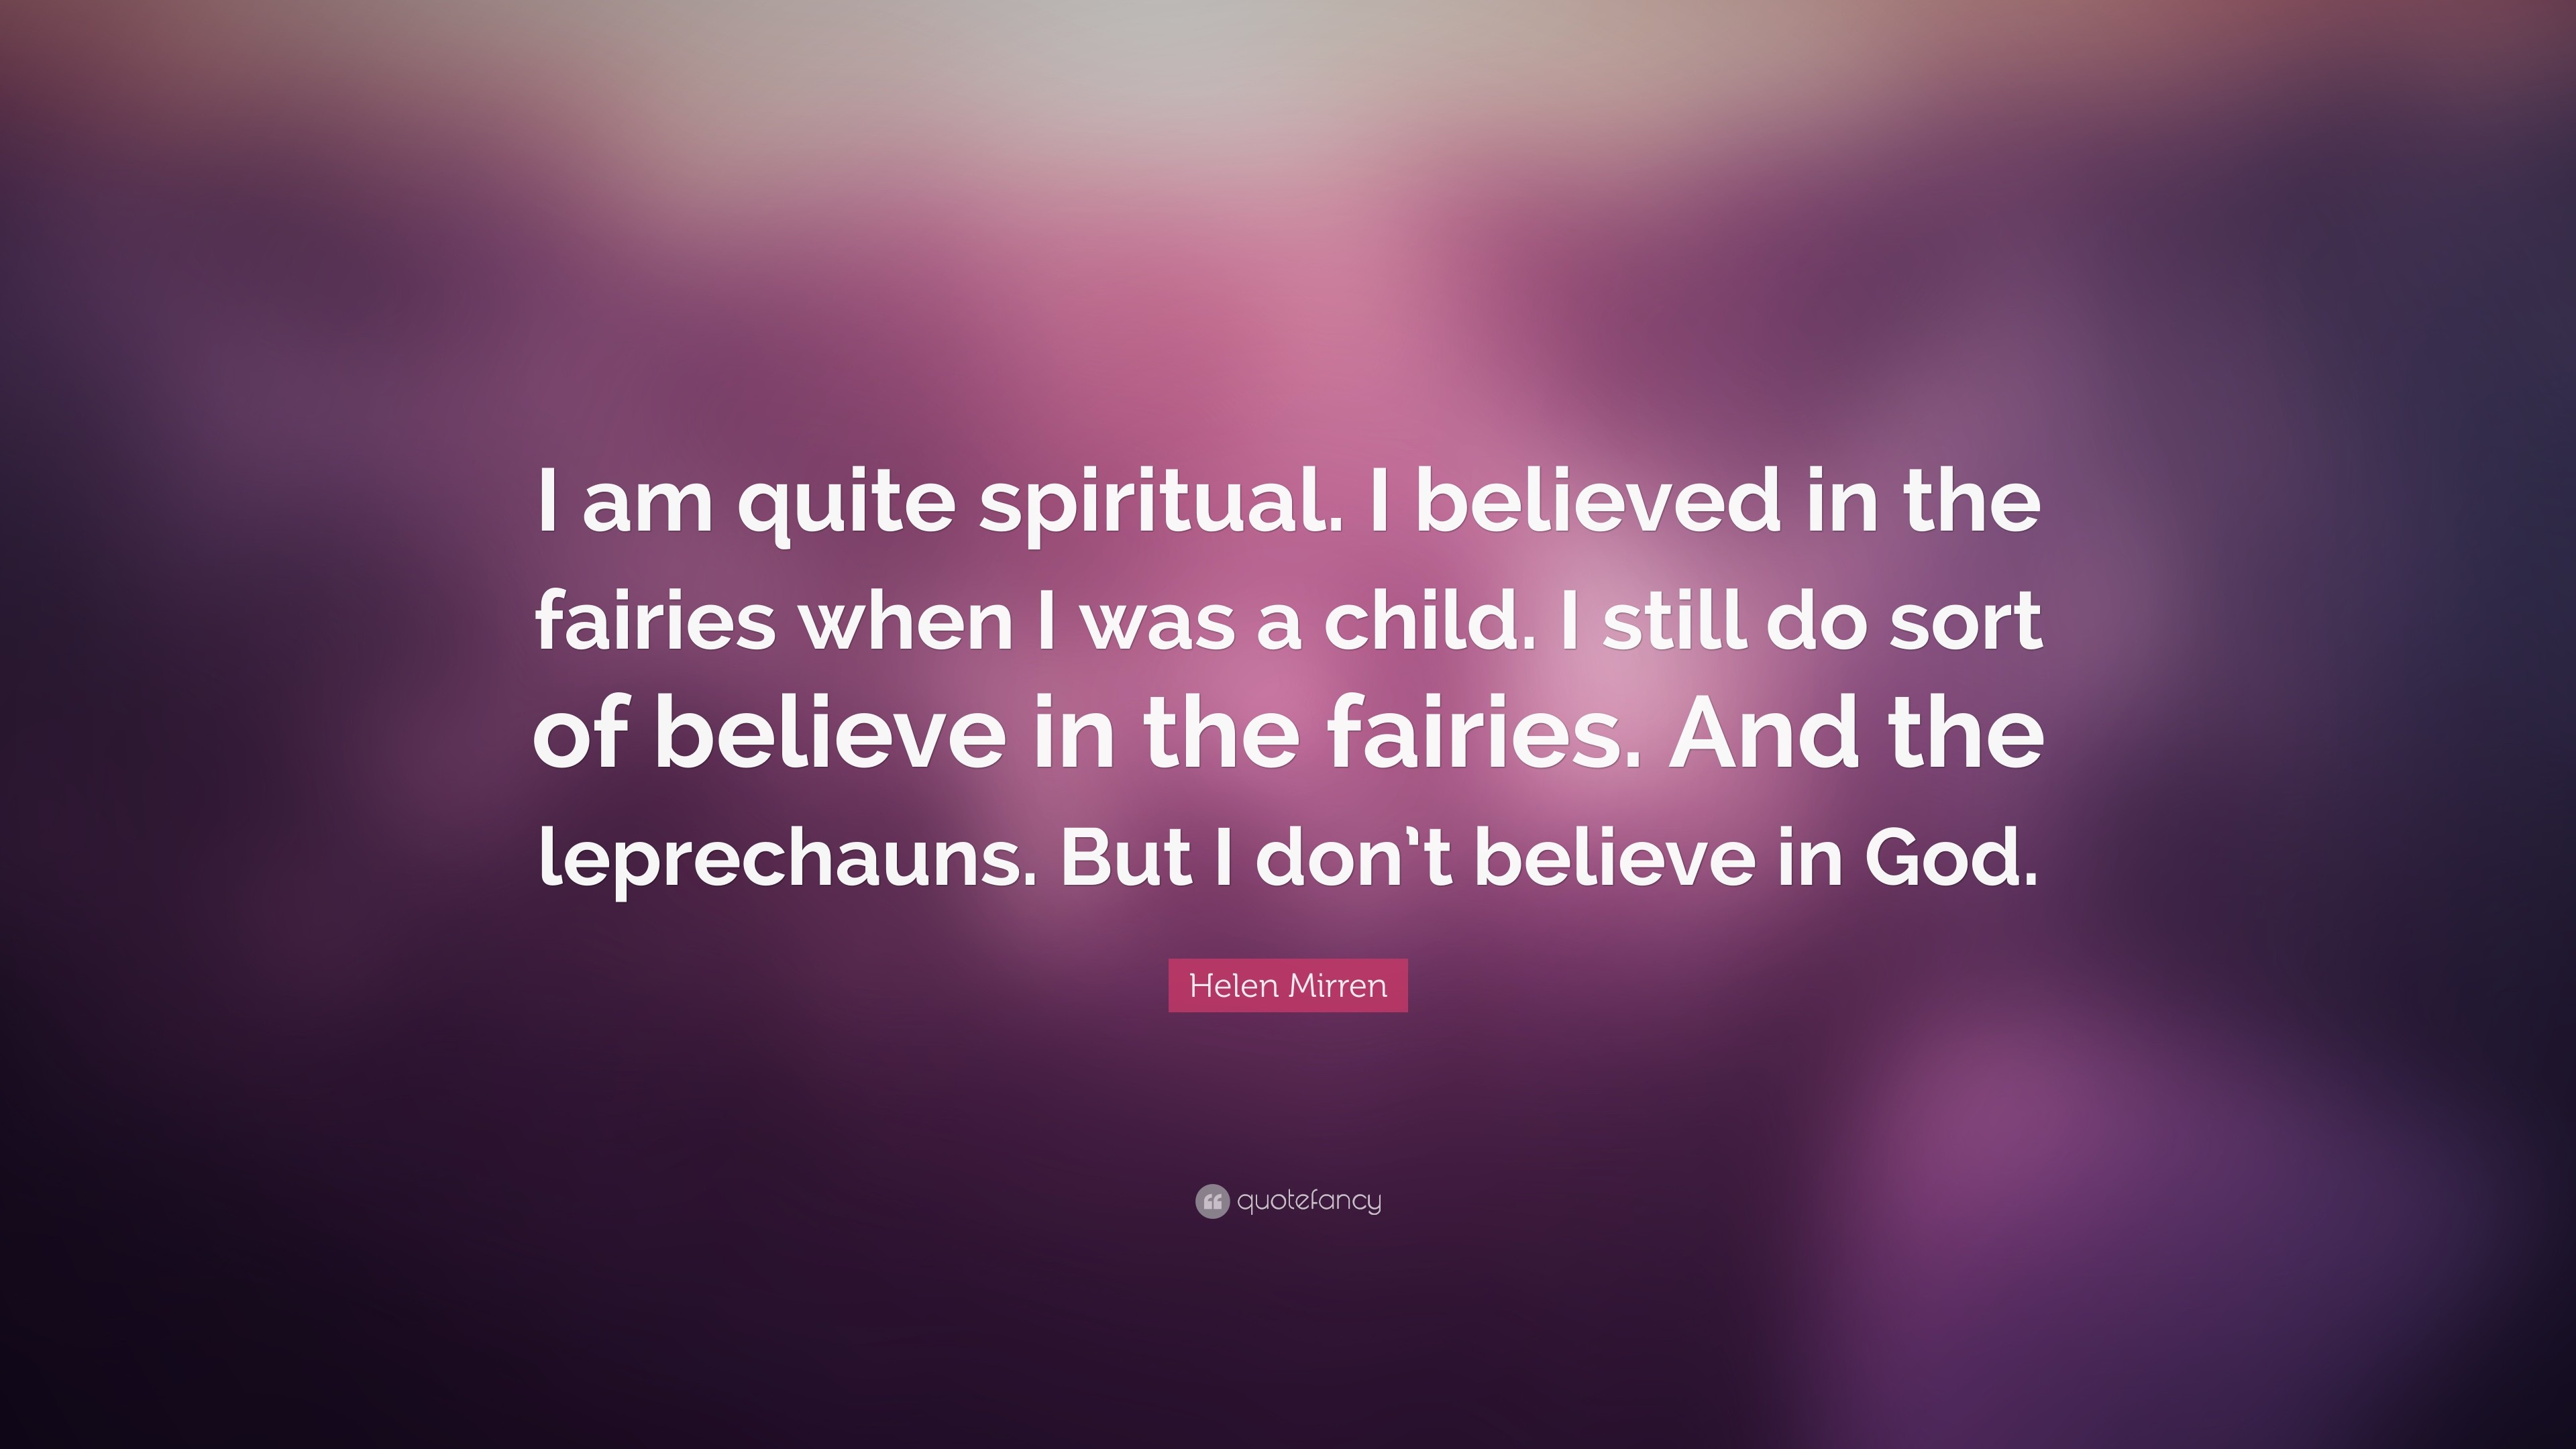 3840x2160 Helen Mirren Quote: “I am quite spiritual. I believed in the fairies when